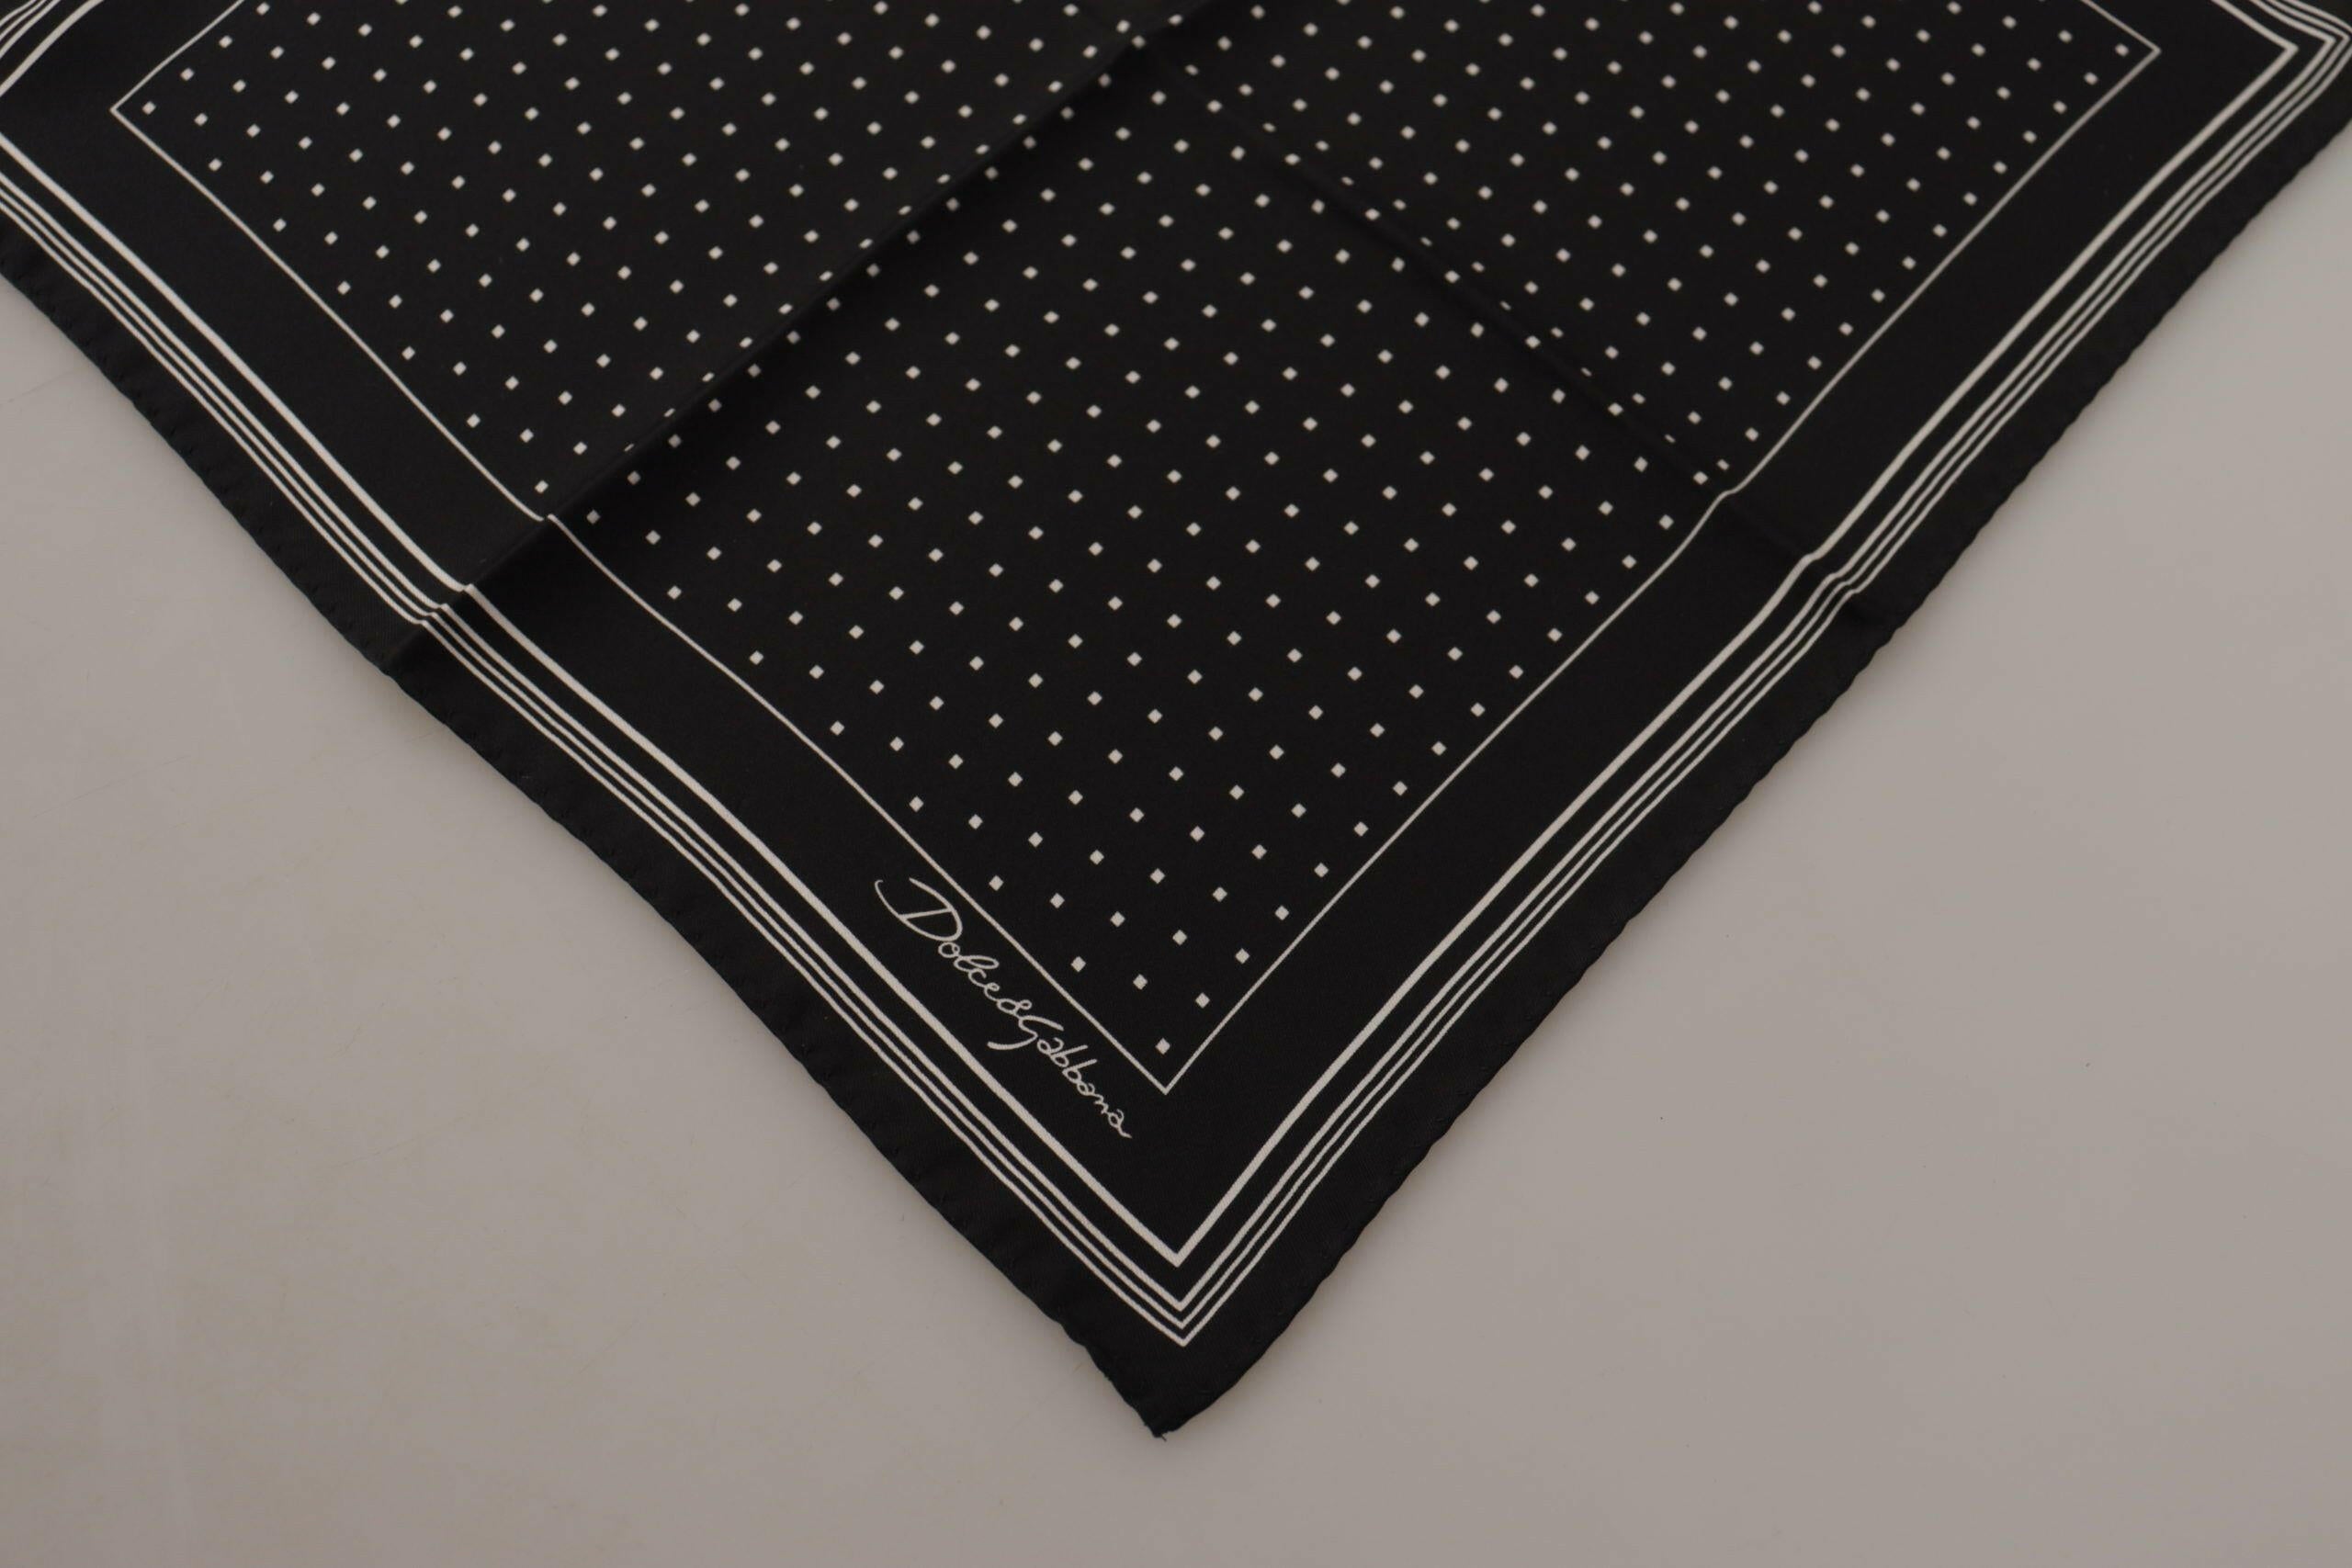 Dolce & Gabbana Black Polka Dots DG Logo Square Handkerchief - GENUINE AUTHENTIC BRAND LLC  